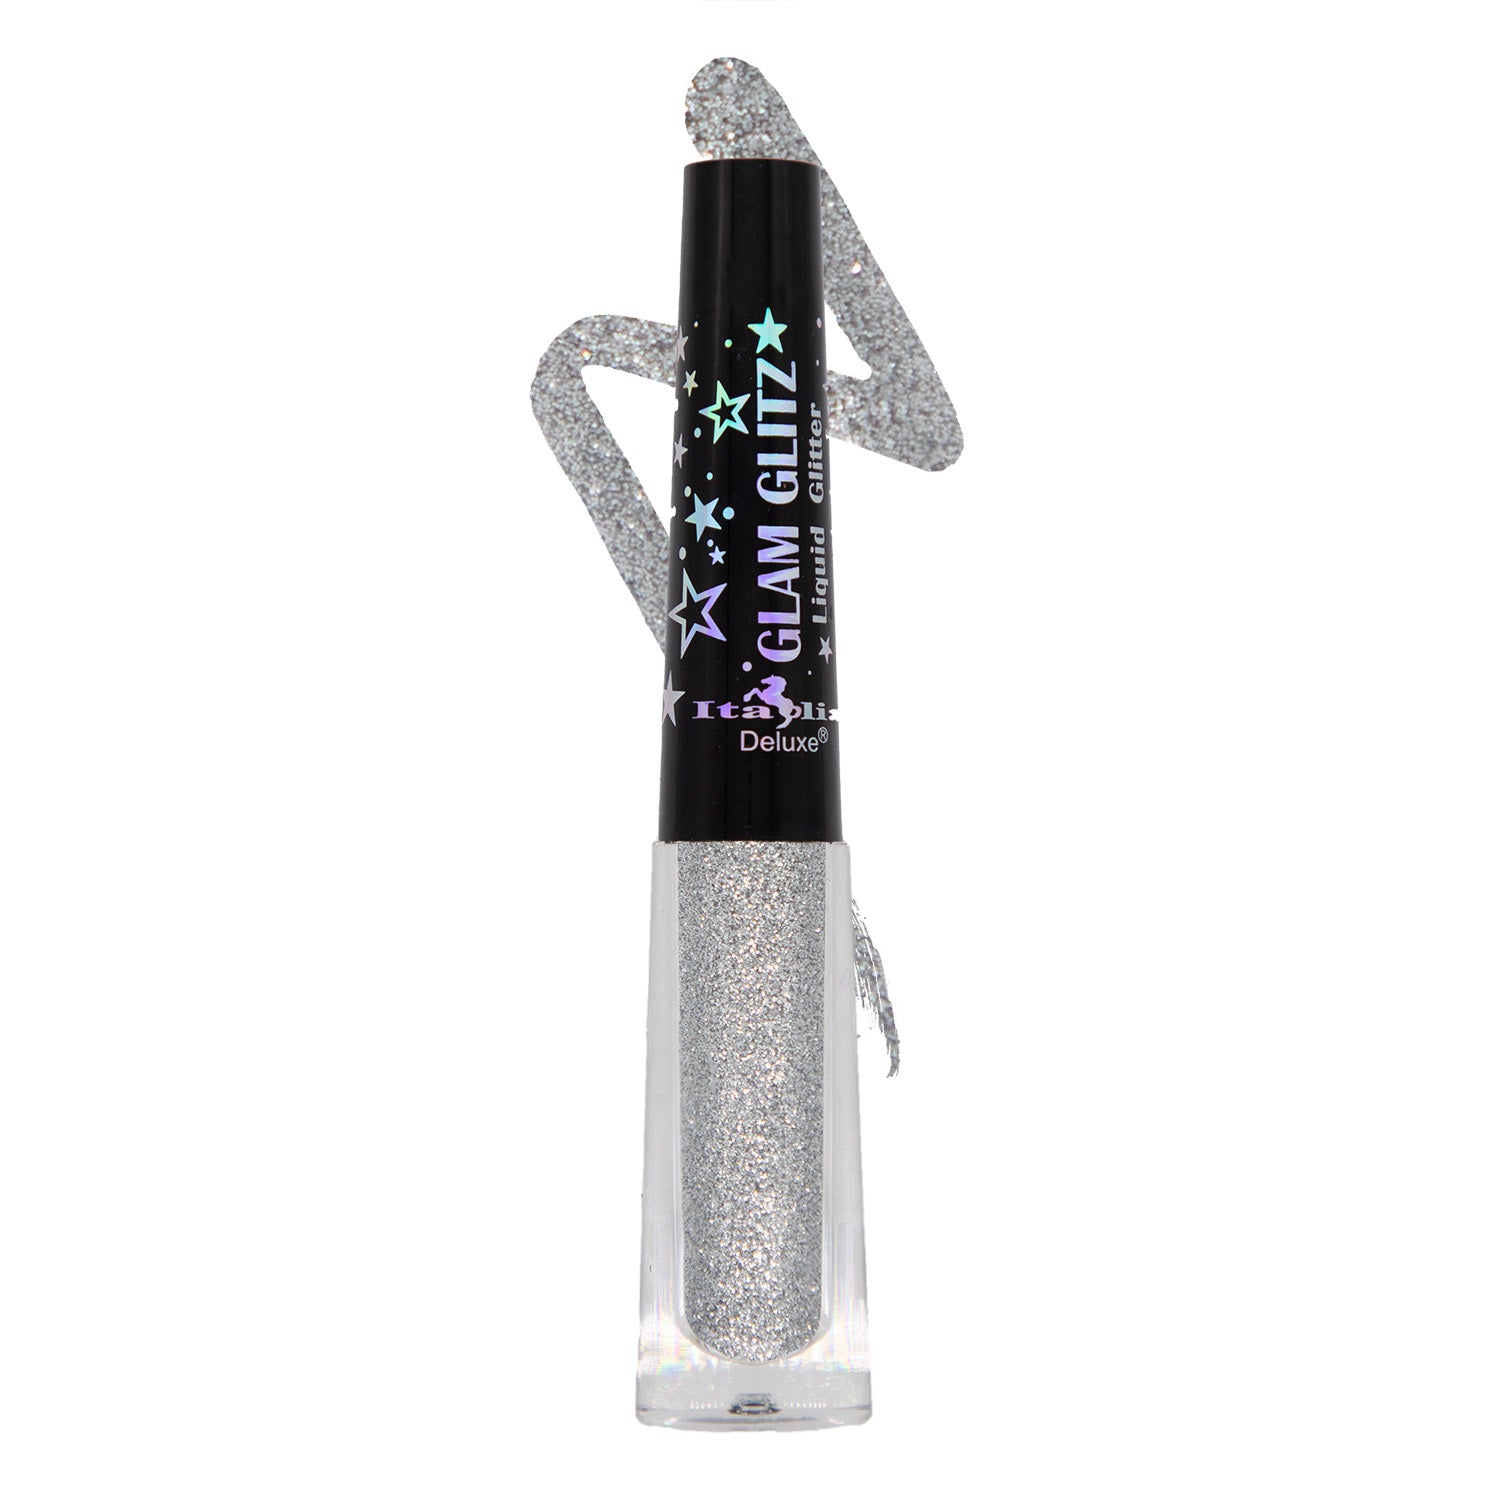 italia Deluxe Glam Glitz Liquid Glitter Eyeliner - Water Resistant - *8 SHADES* - A5 - Bronze